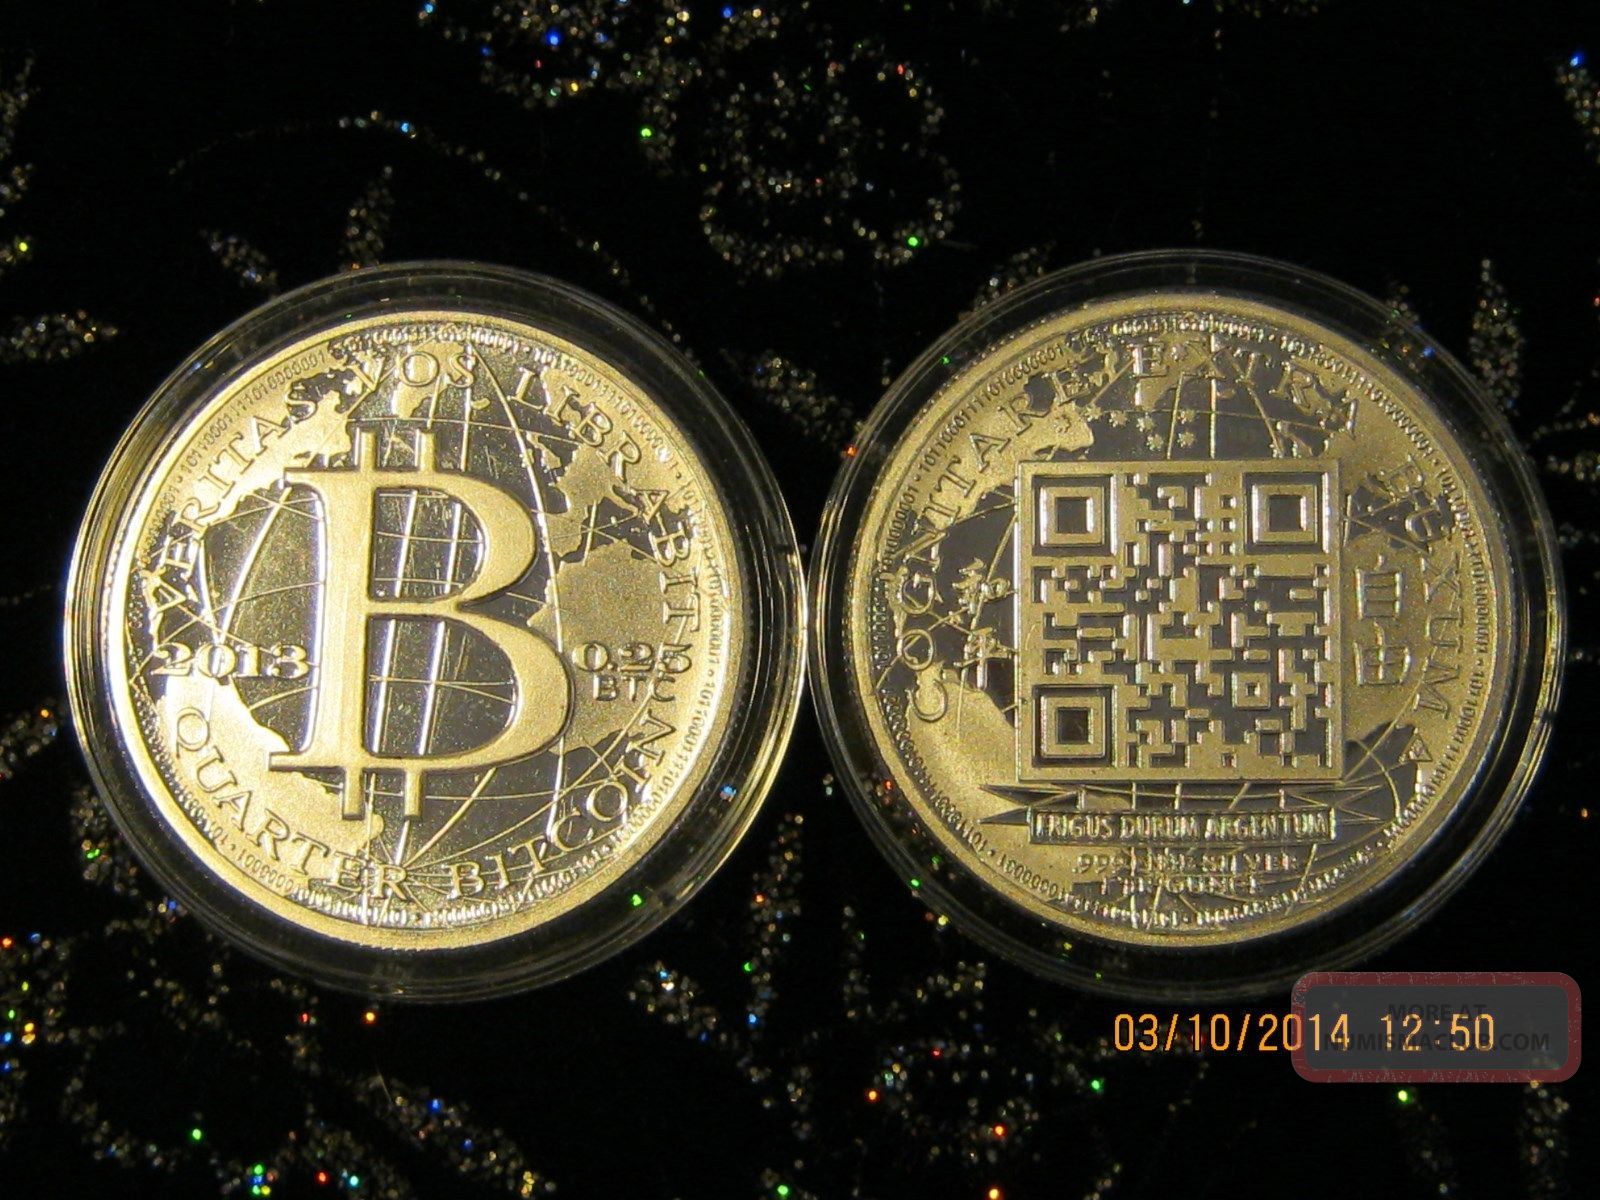 2013 physical bitcoin